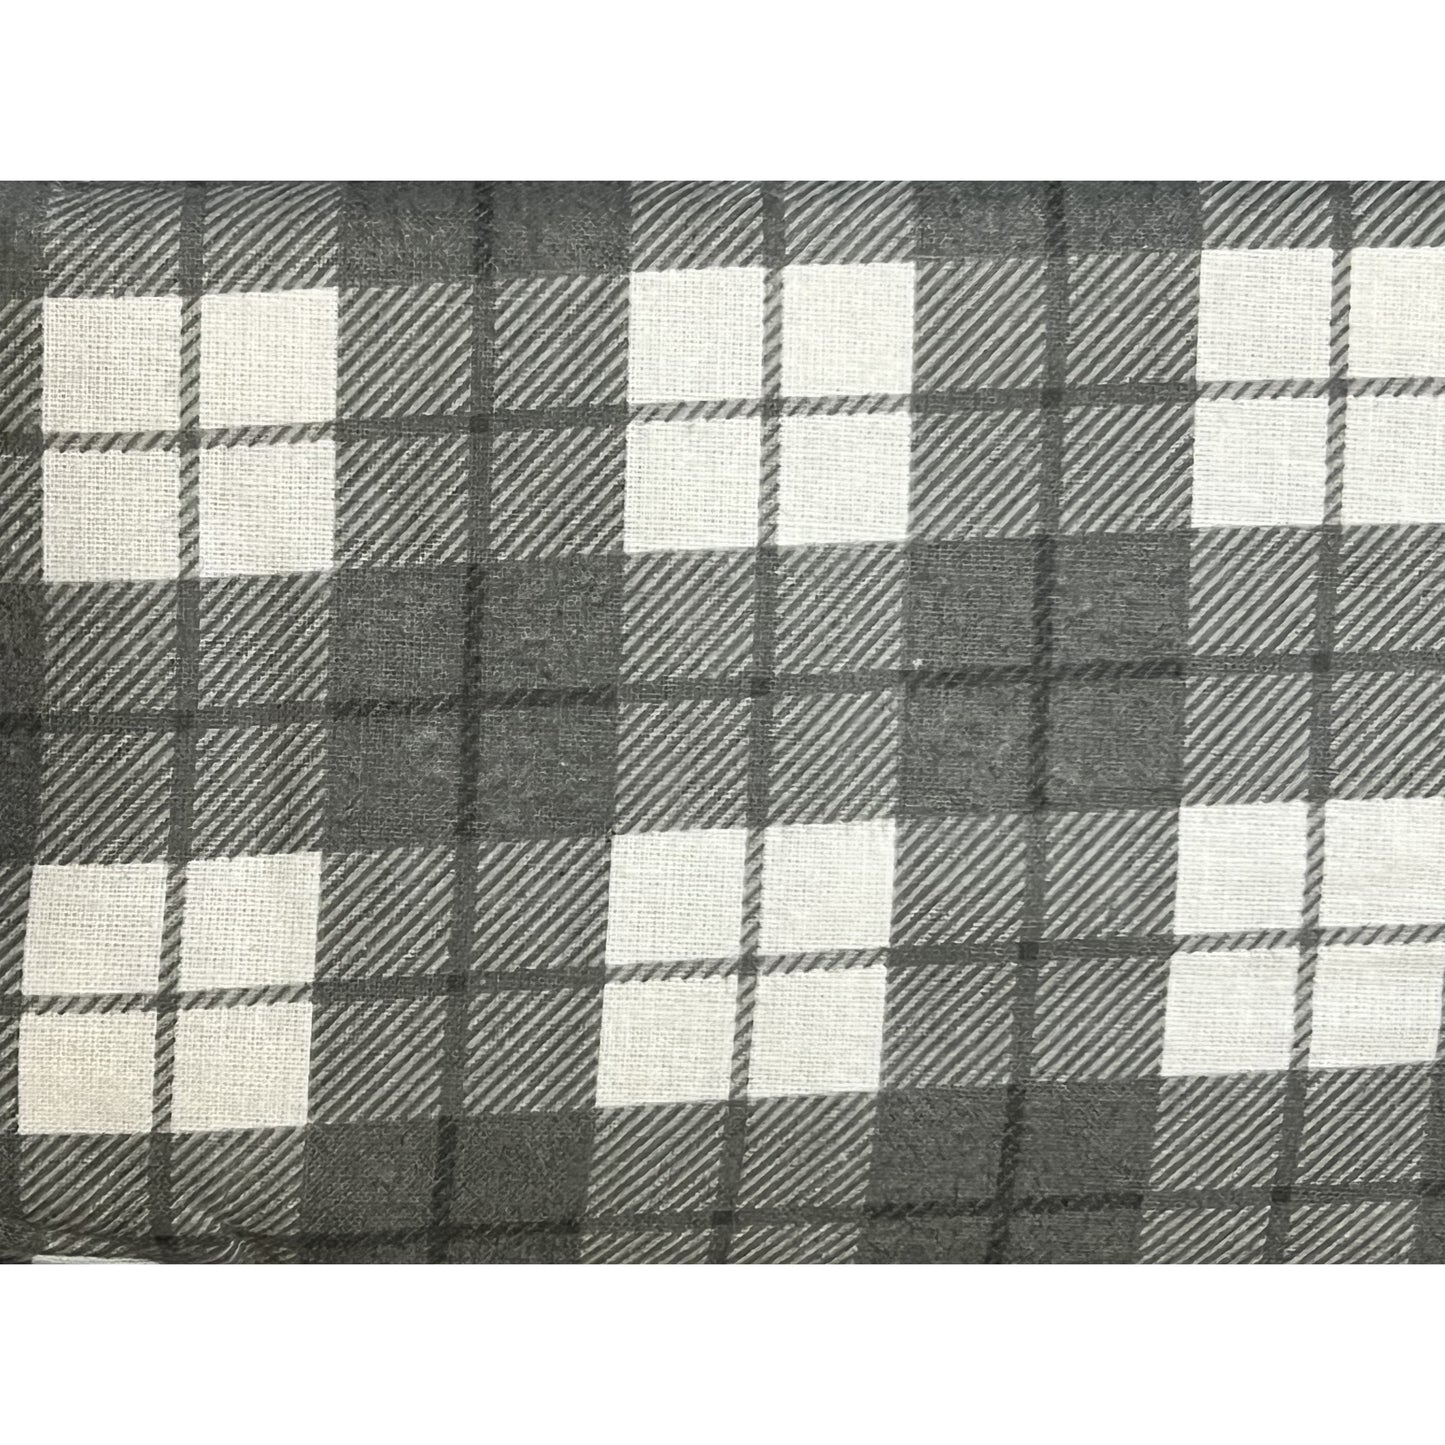 CB Premium Flannel Cotton Sheet Set